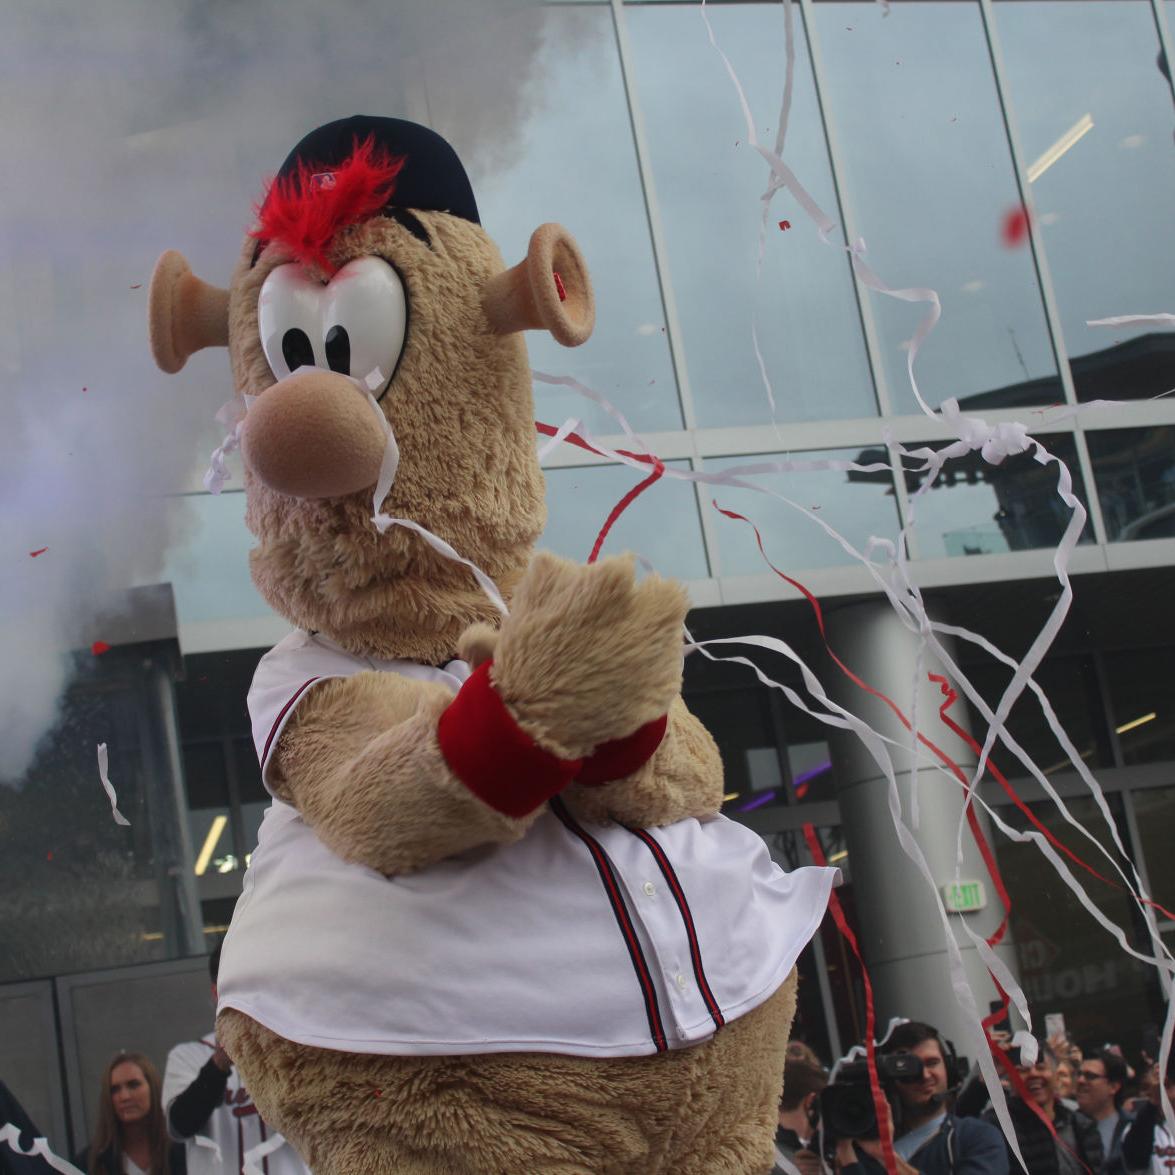 Atlanta Braves Reveal Disturbing New Mascot